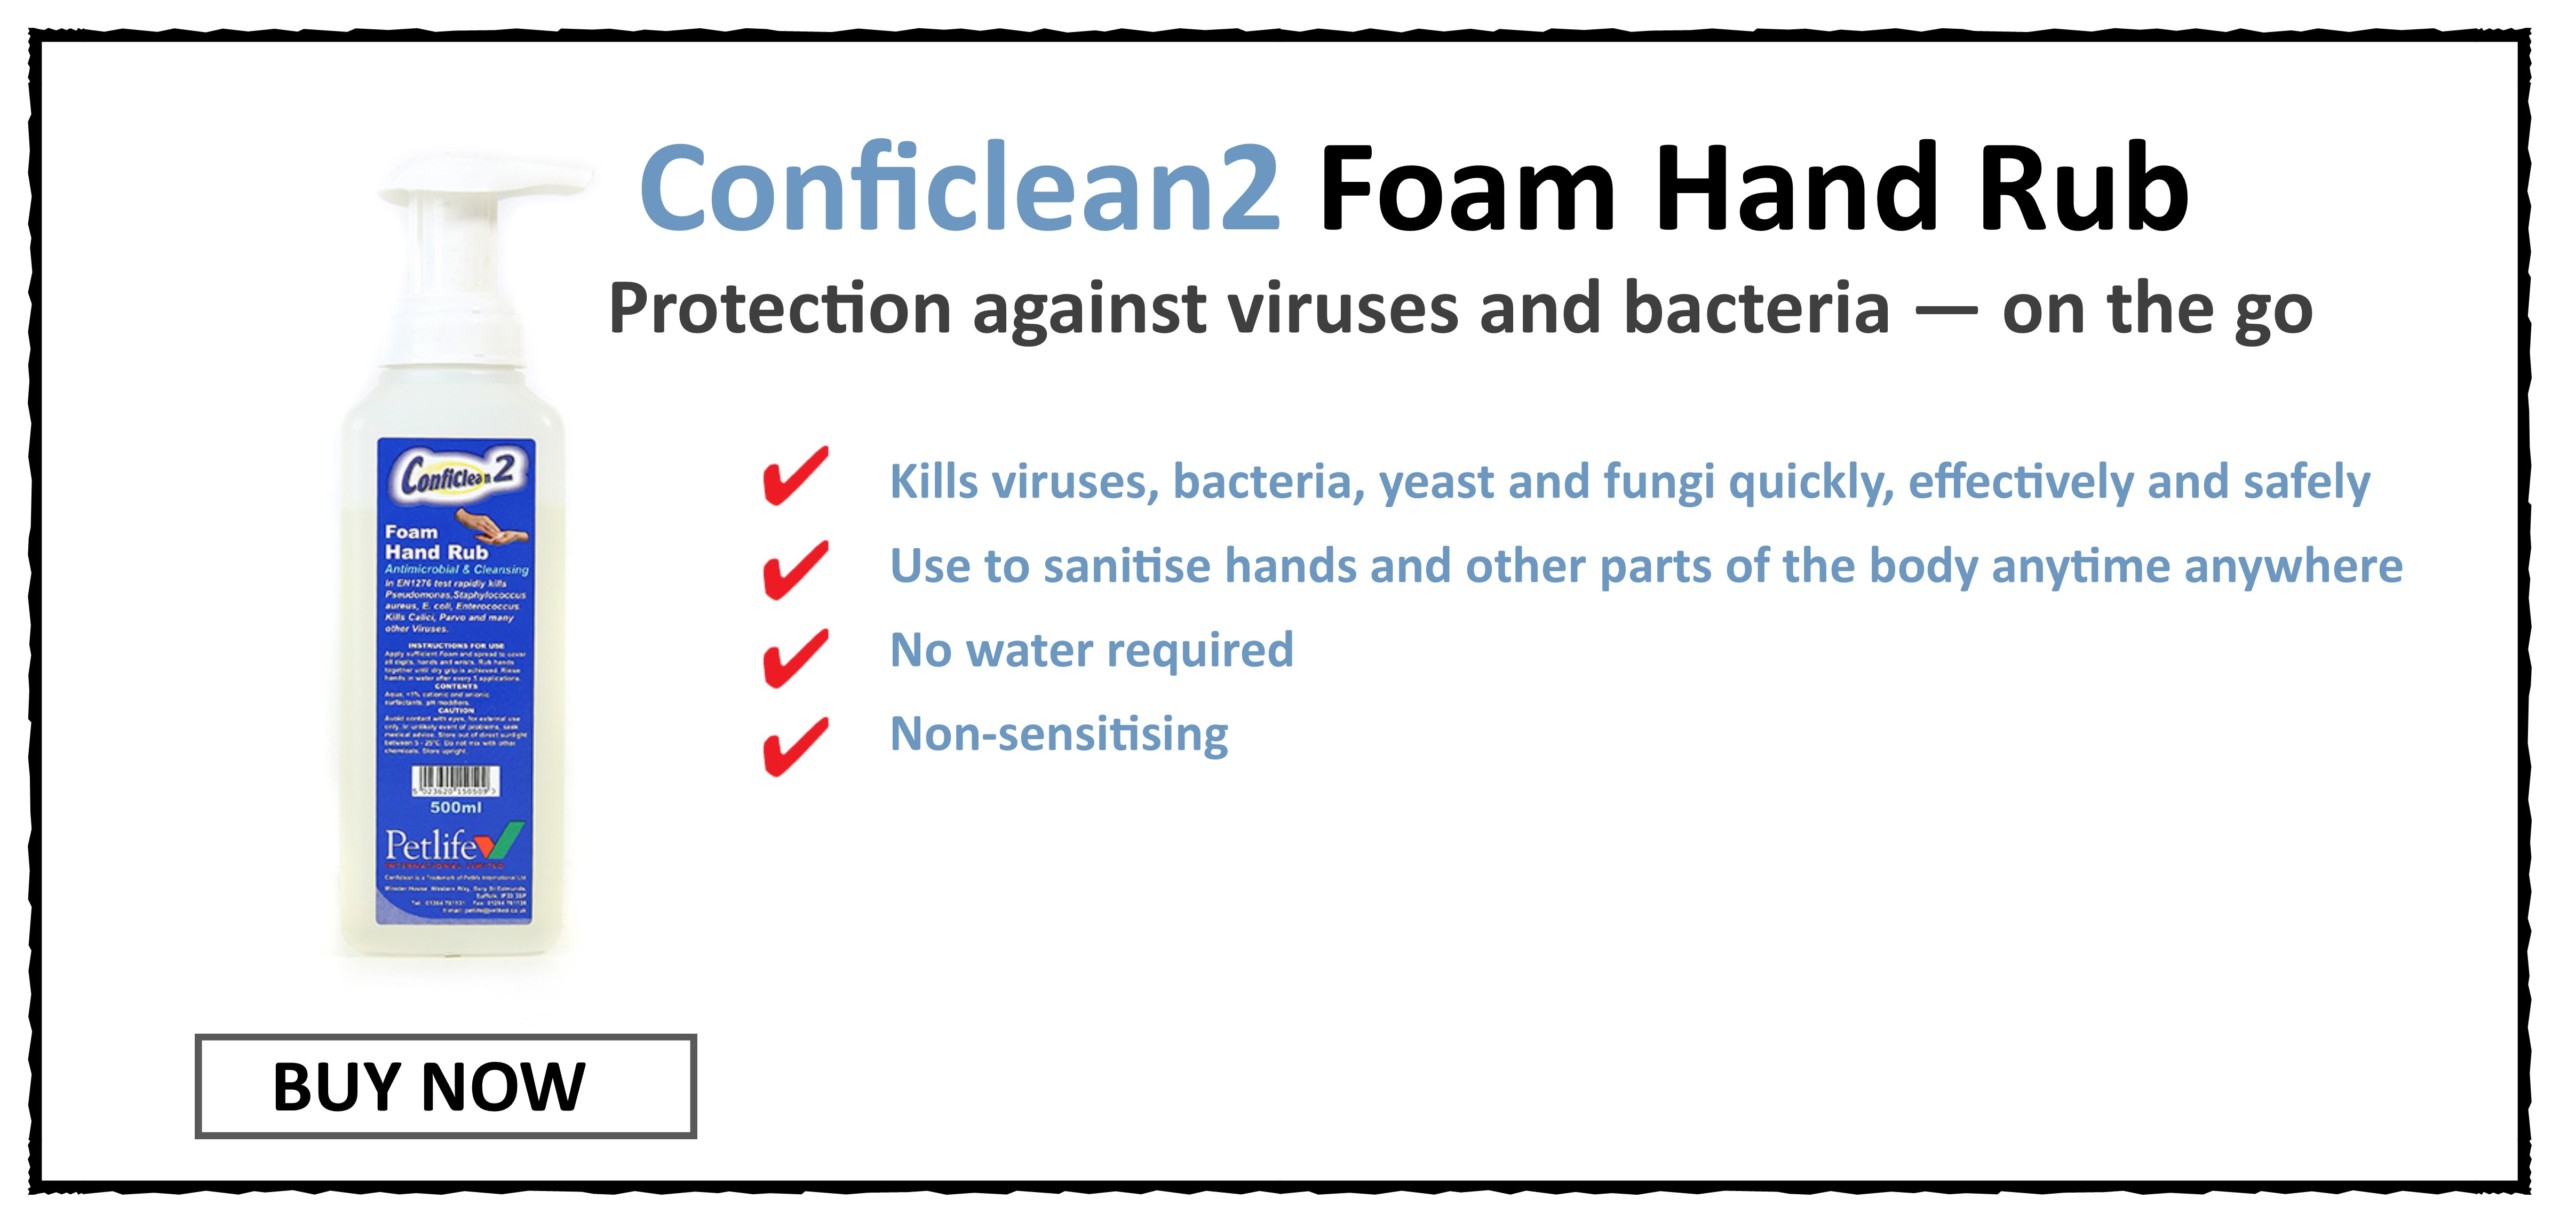 Conficlean2 Foam Hand Rub